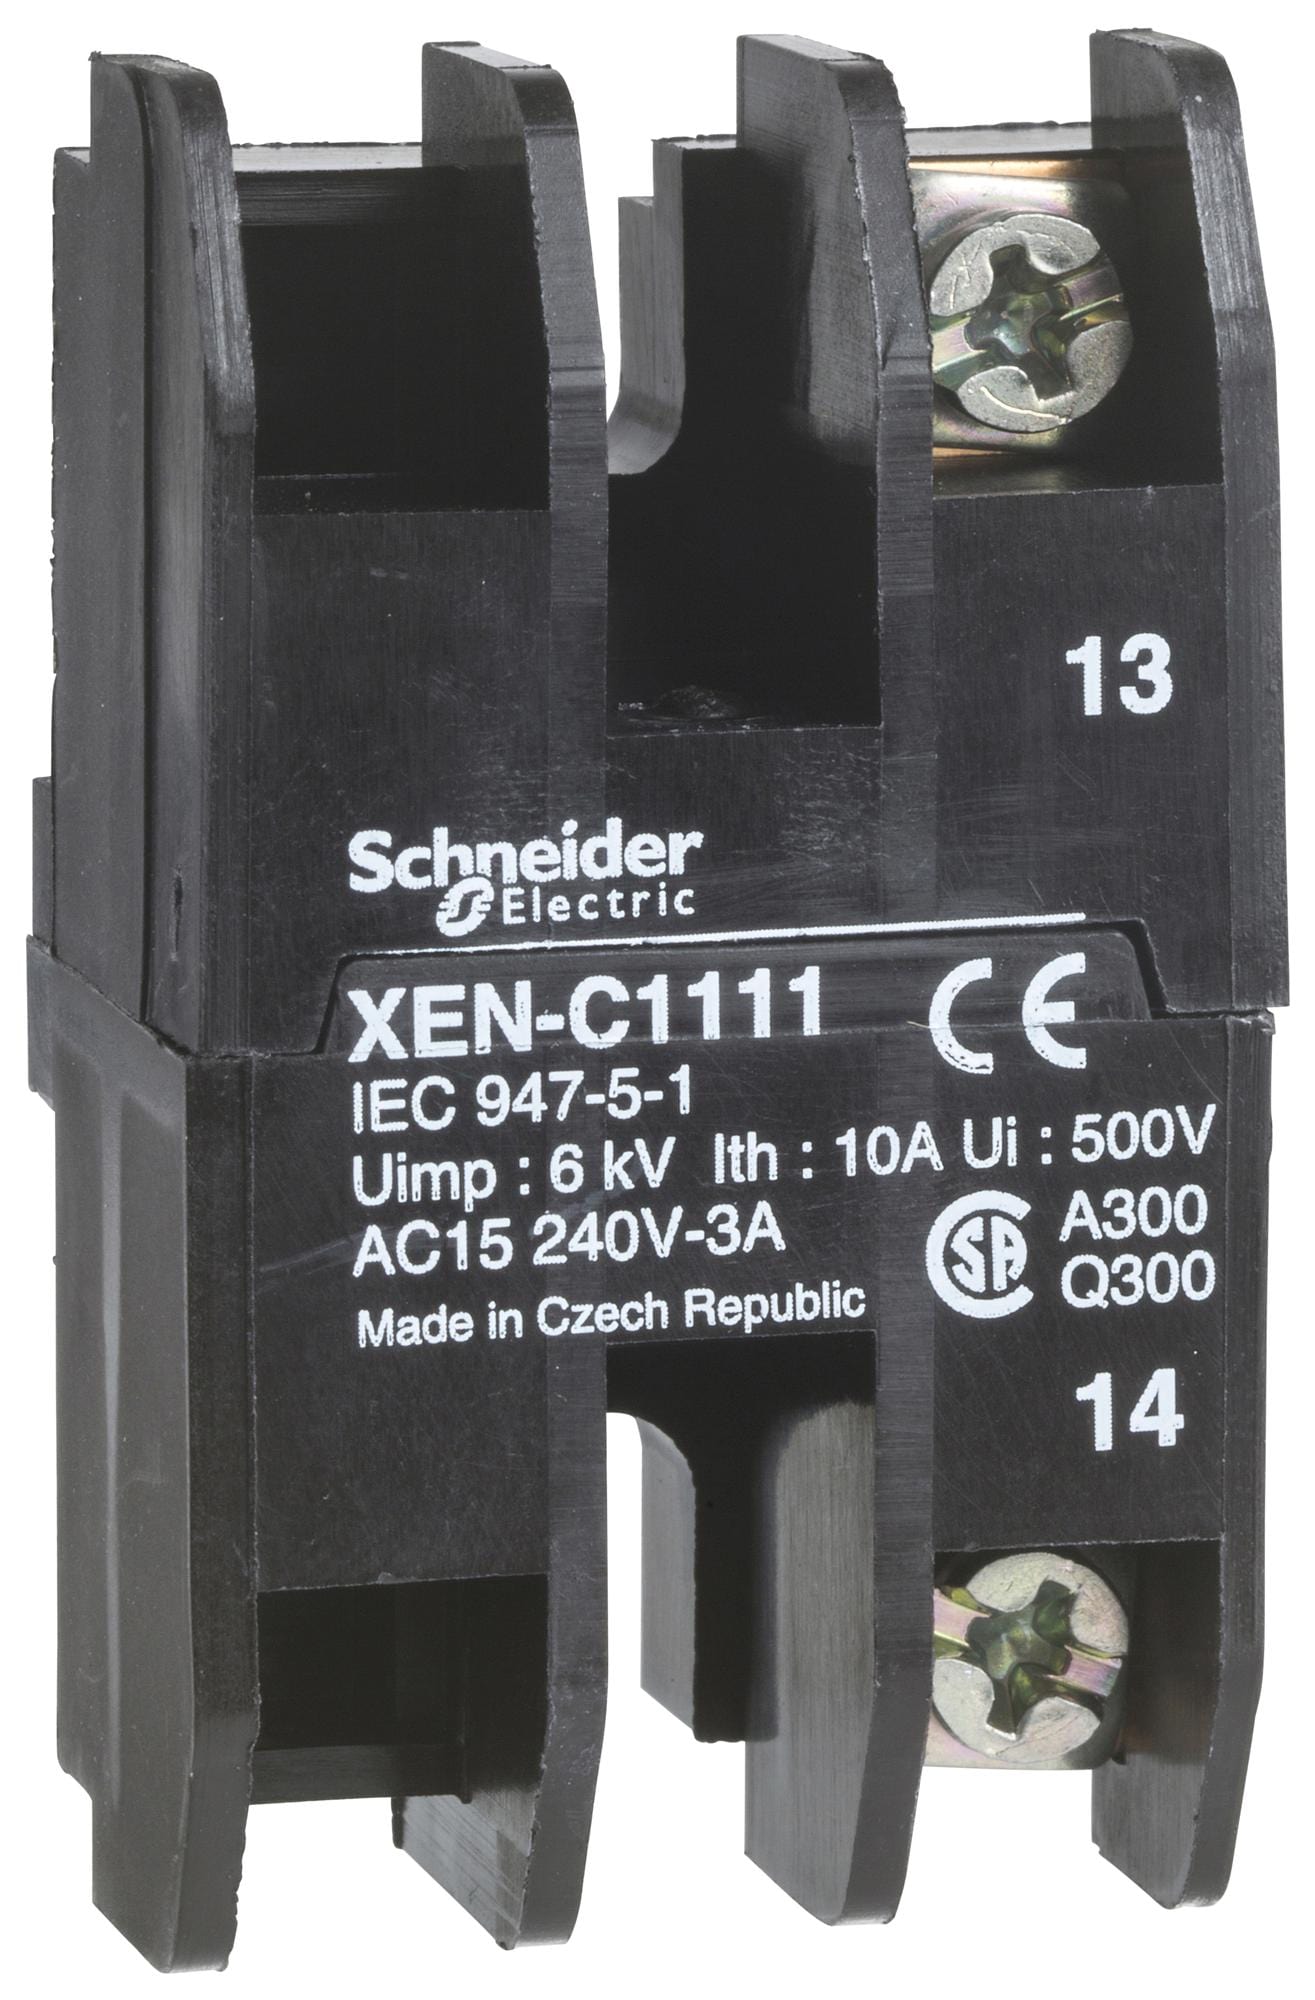 SCHNEIDER ELECTRIC Contact Blocks XENC1121 CONTACT BLOCK, 3A, 240VAC, SCREW CLAMP SCHNEIDER ELECTRIC 3114847 XENC1121